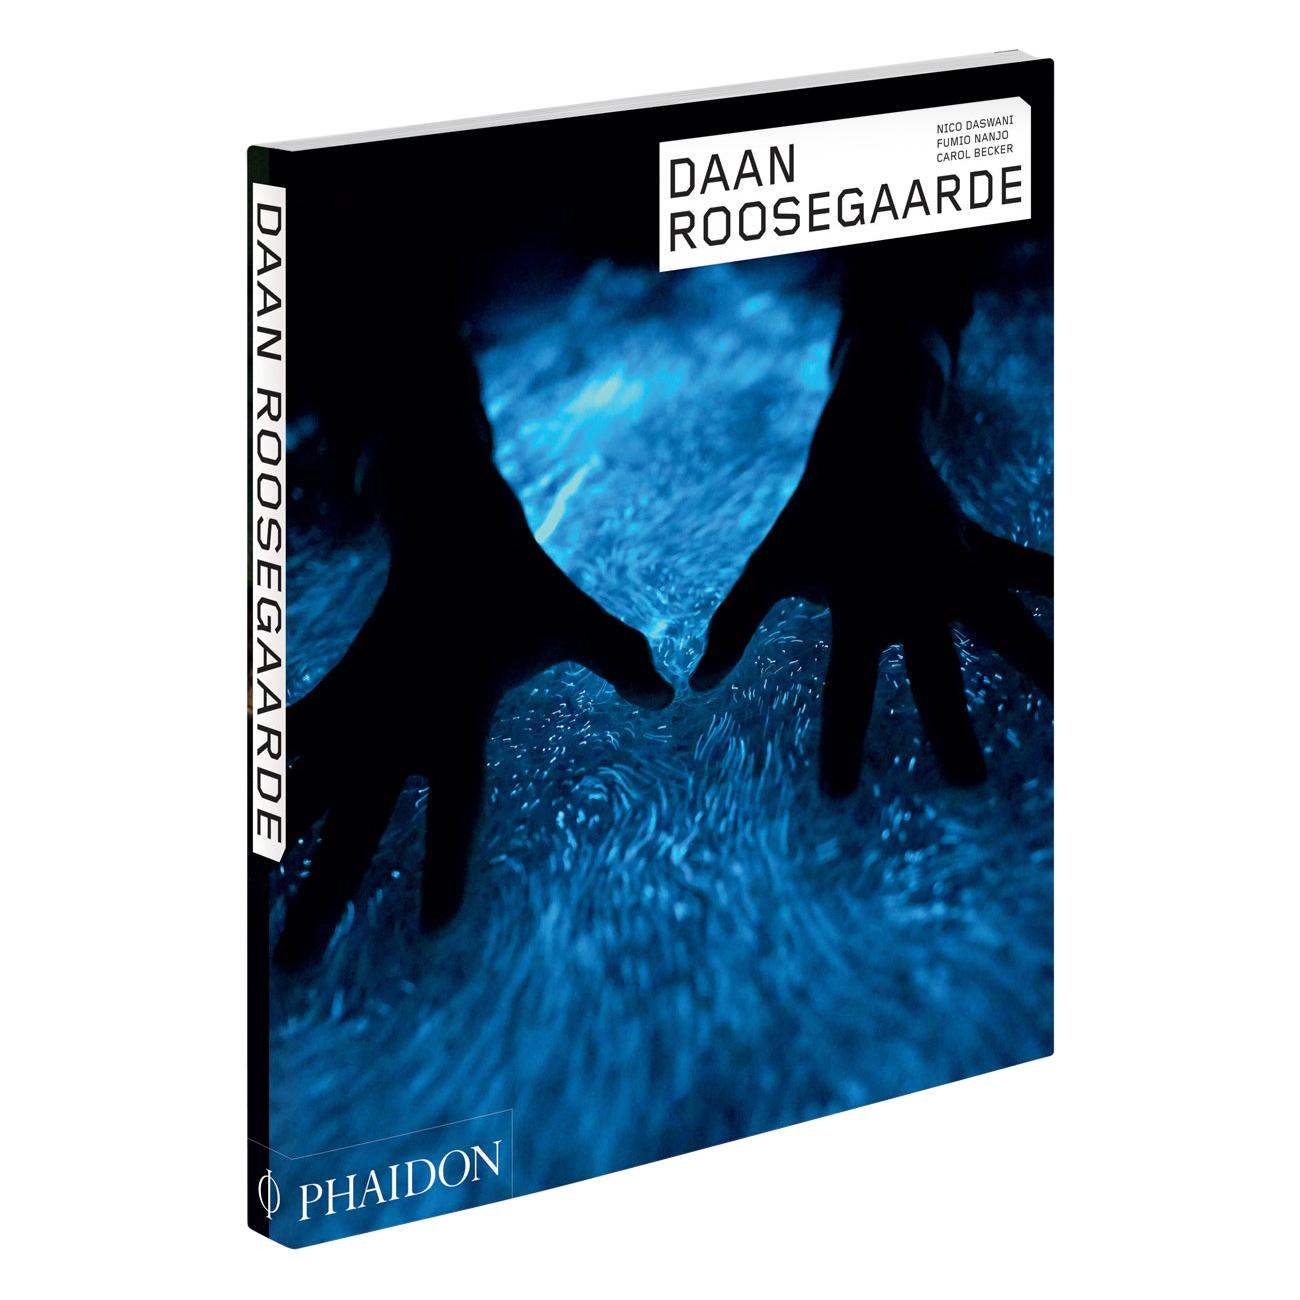 Daan Roosegaarde 'Phaidon Contemporary Artists Series'